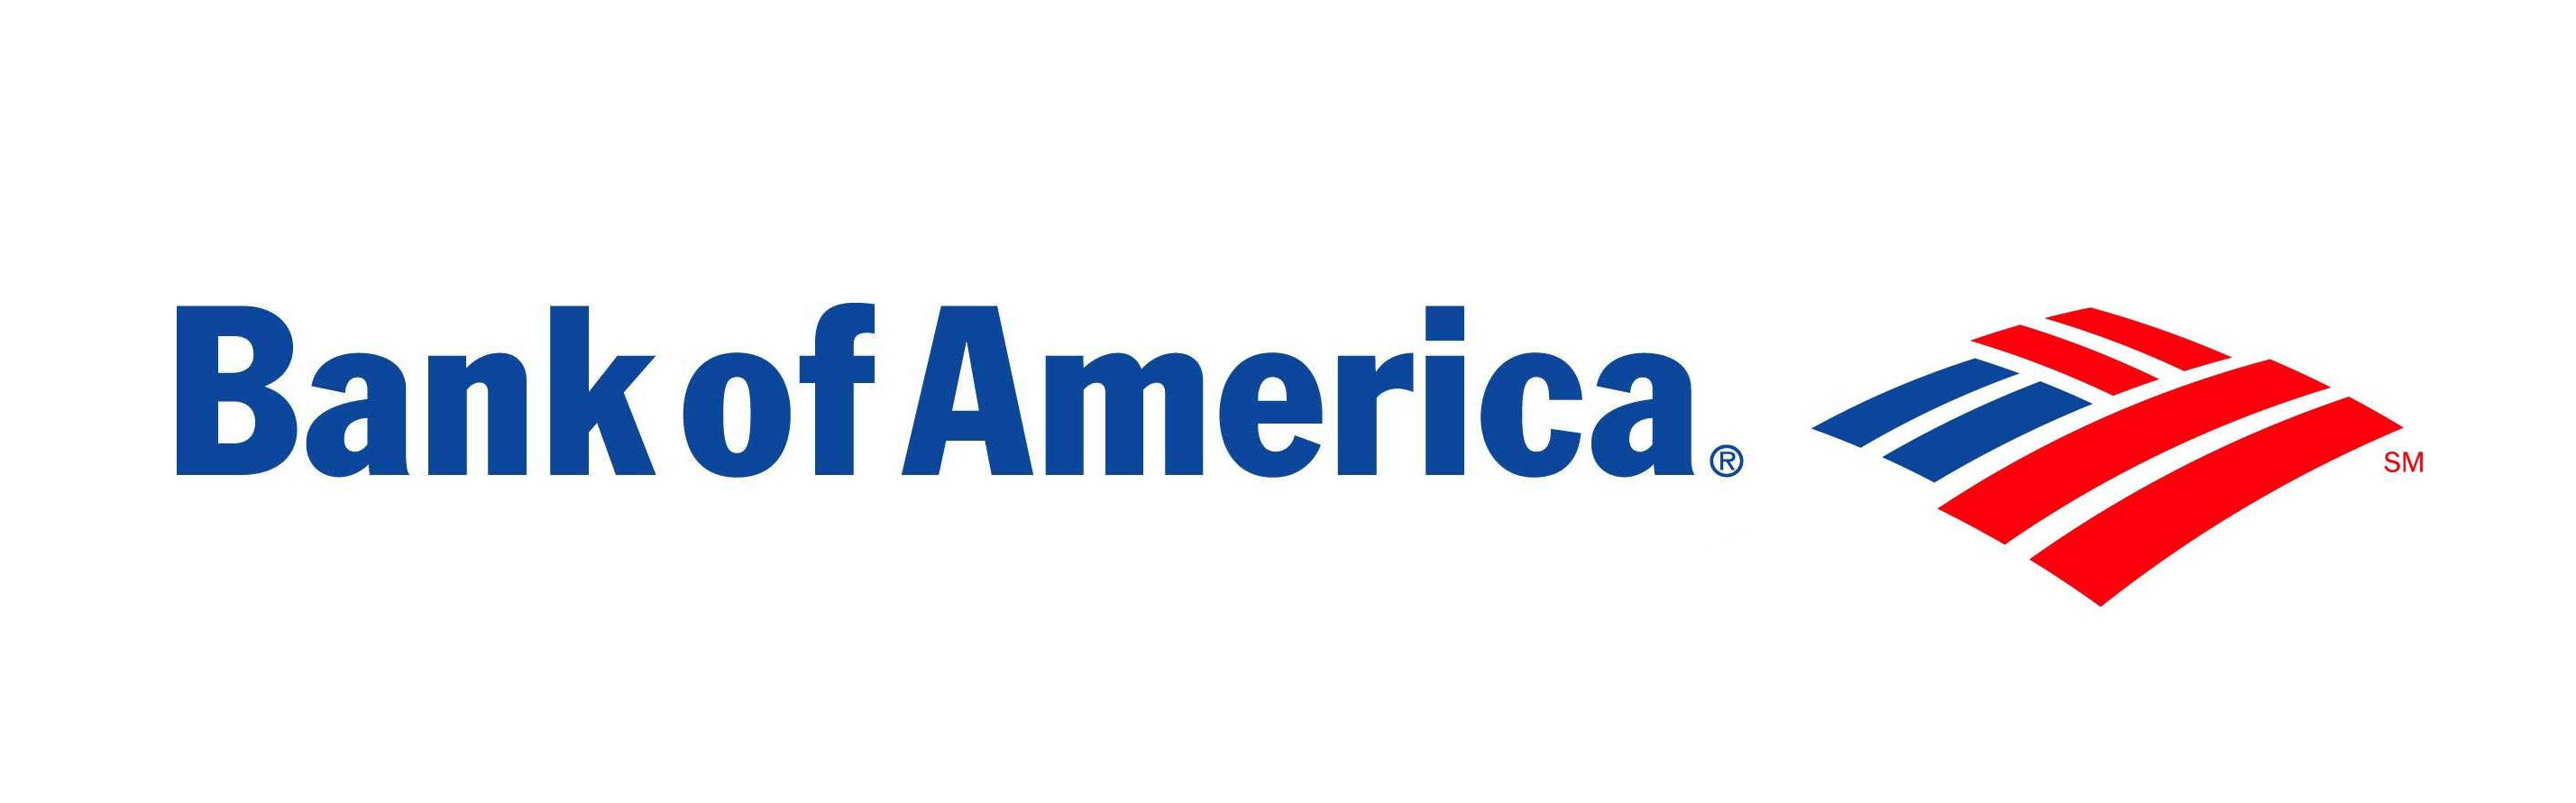 Clean Bank Of America 1998 Logo